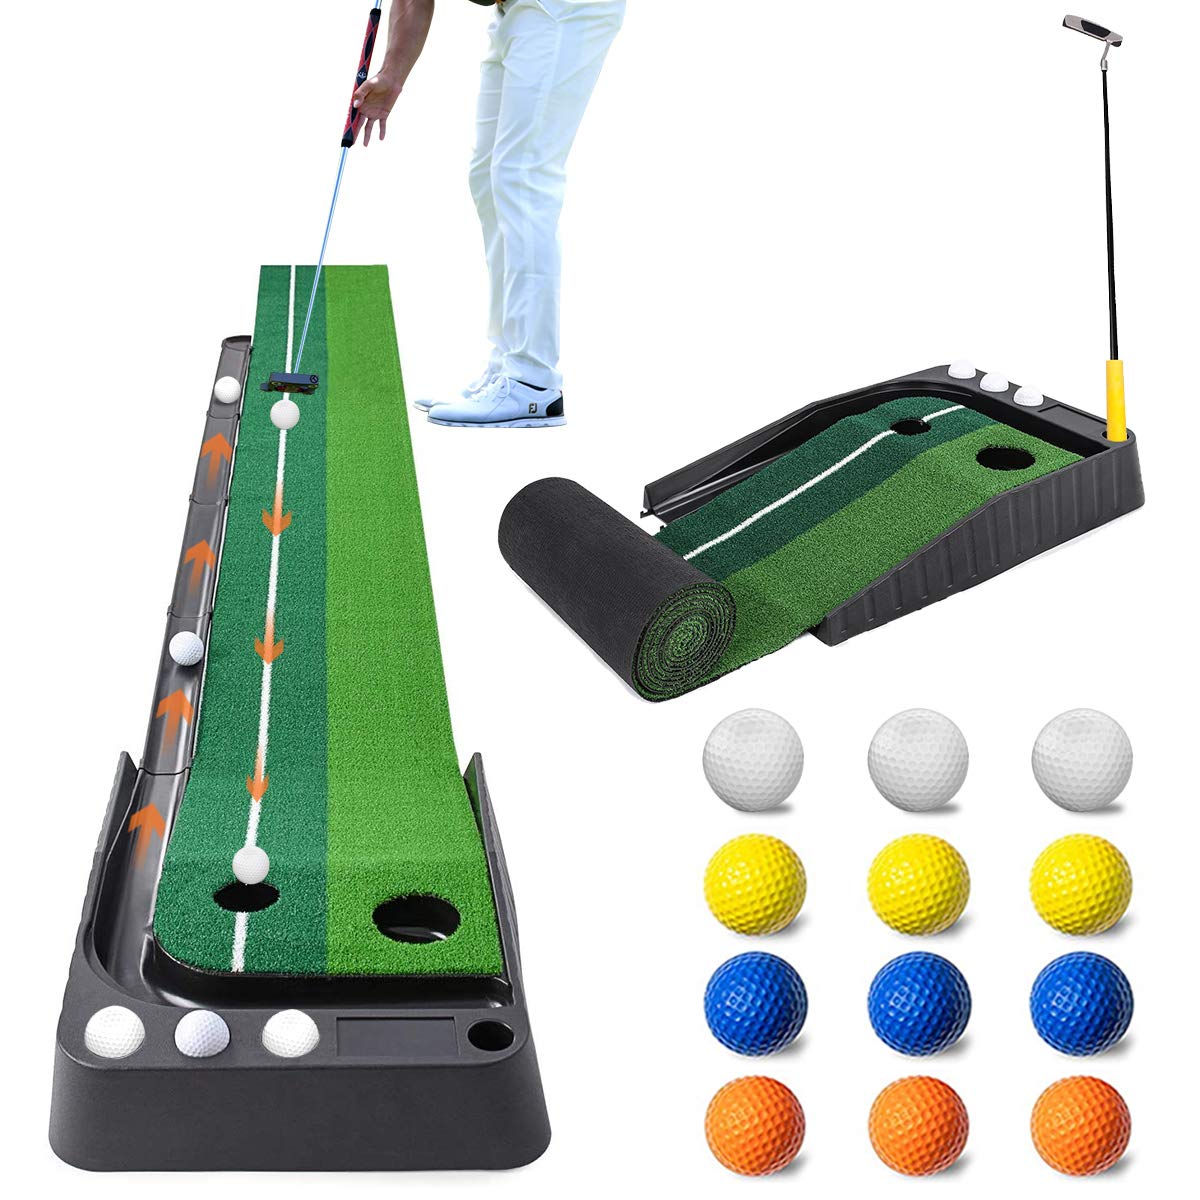 G-LTECK Aliennana Golf Putting Green Mat with Auto Ball Return Golf Practice Training Aid